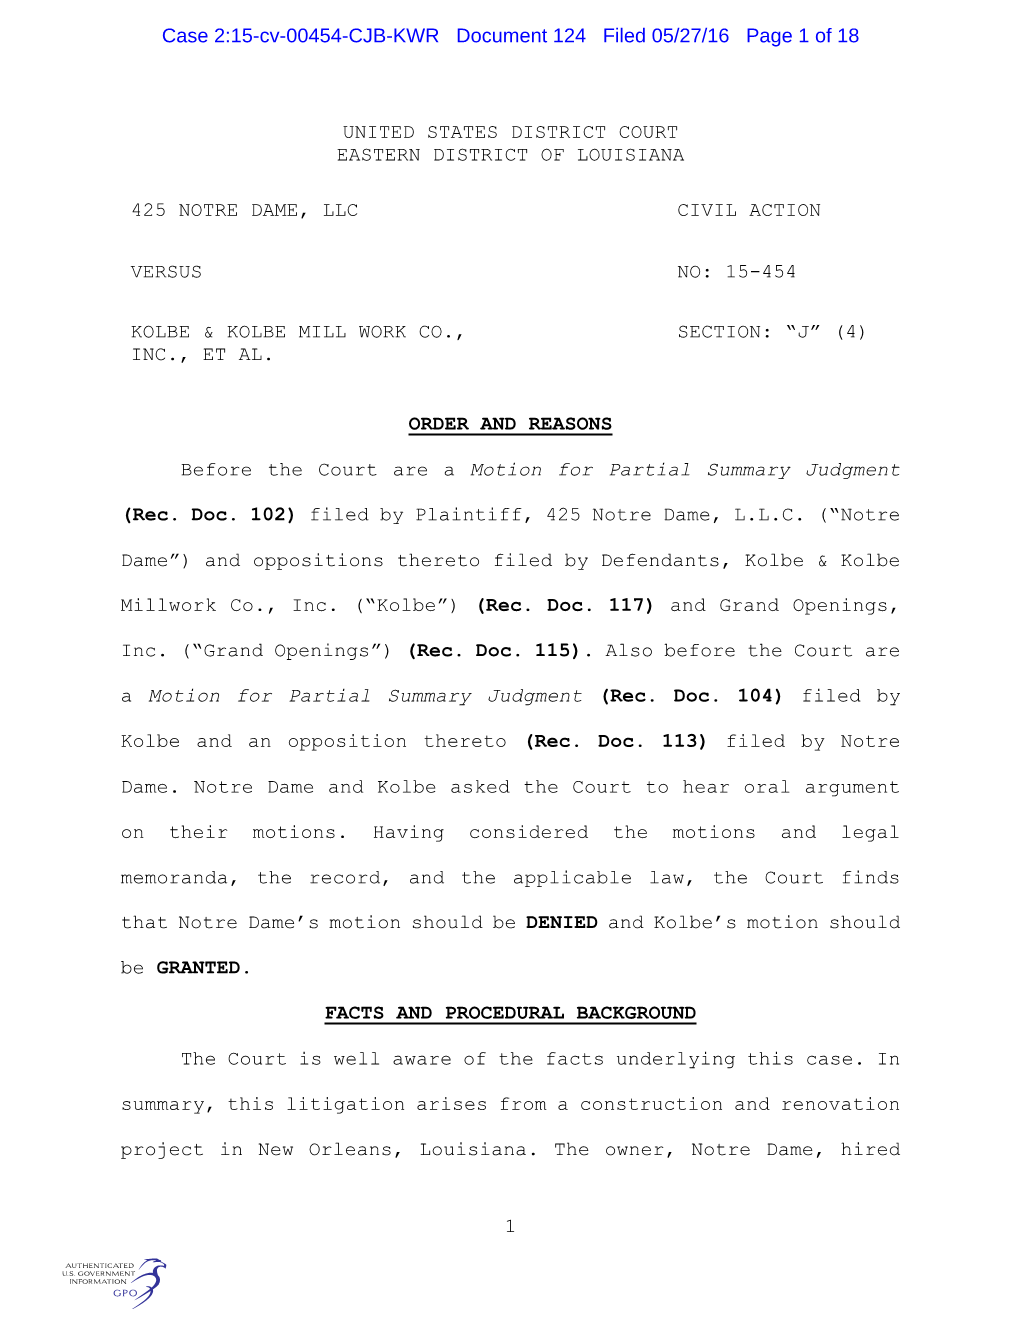 Case 2:15-Cv-00454-CJB-KWR Document 124 Filed 05/27/16 Page 1 of 18